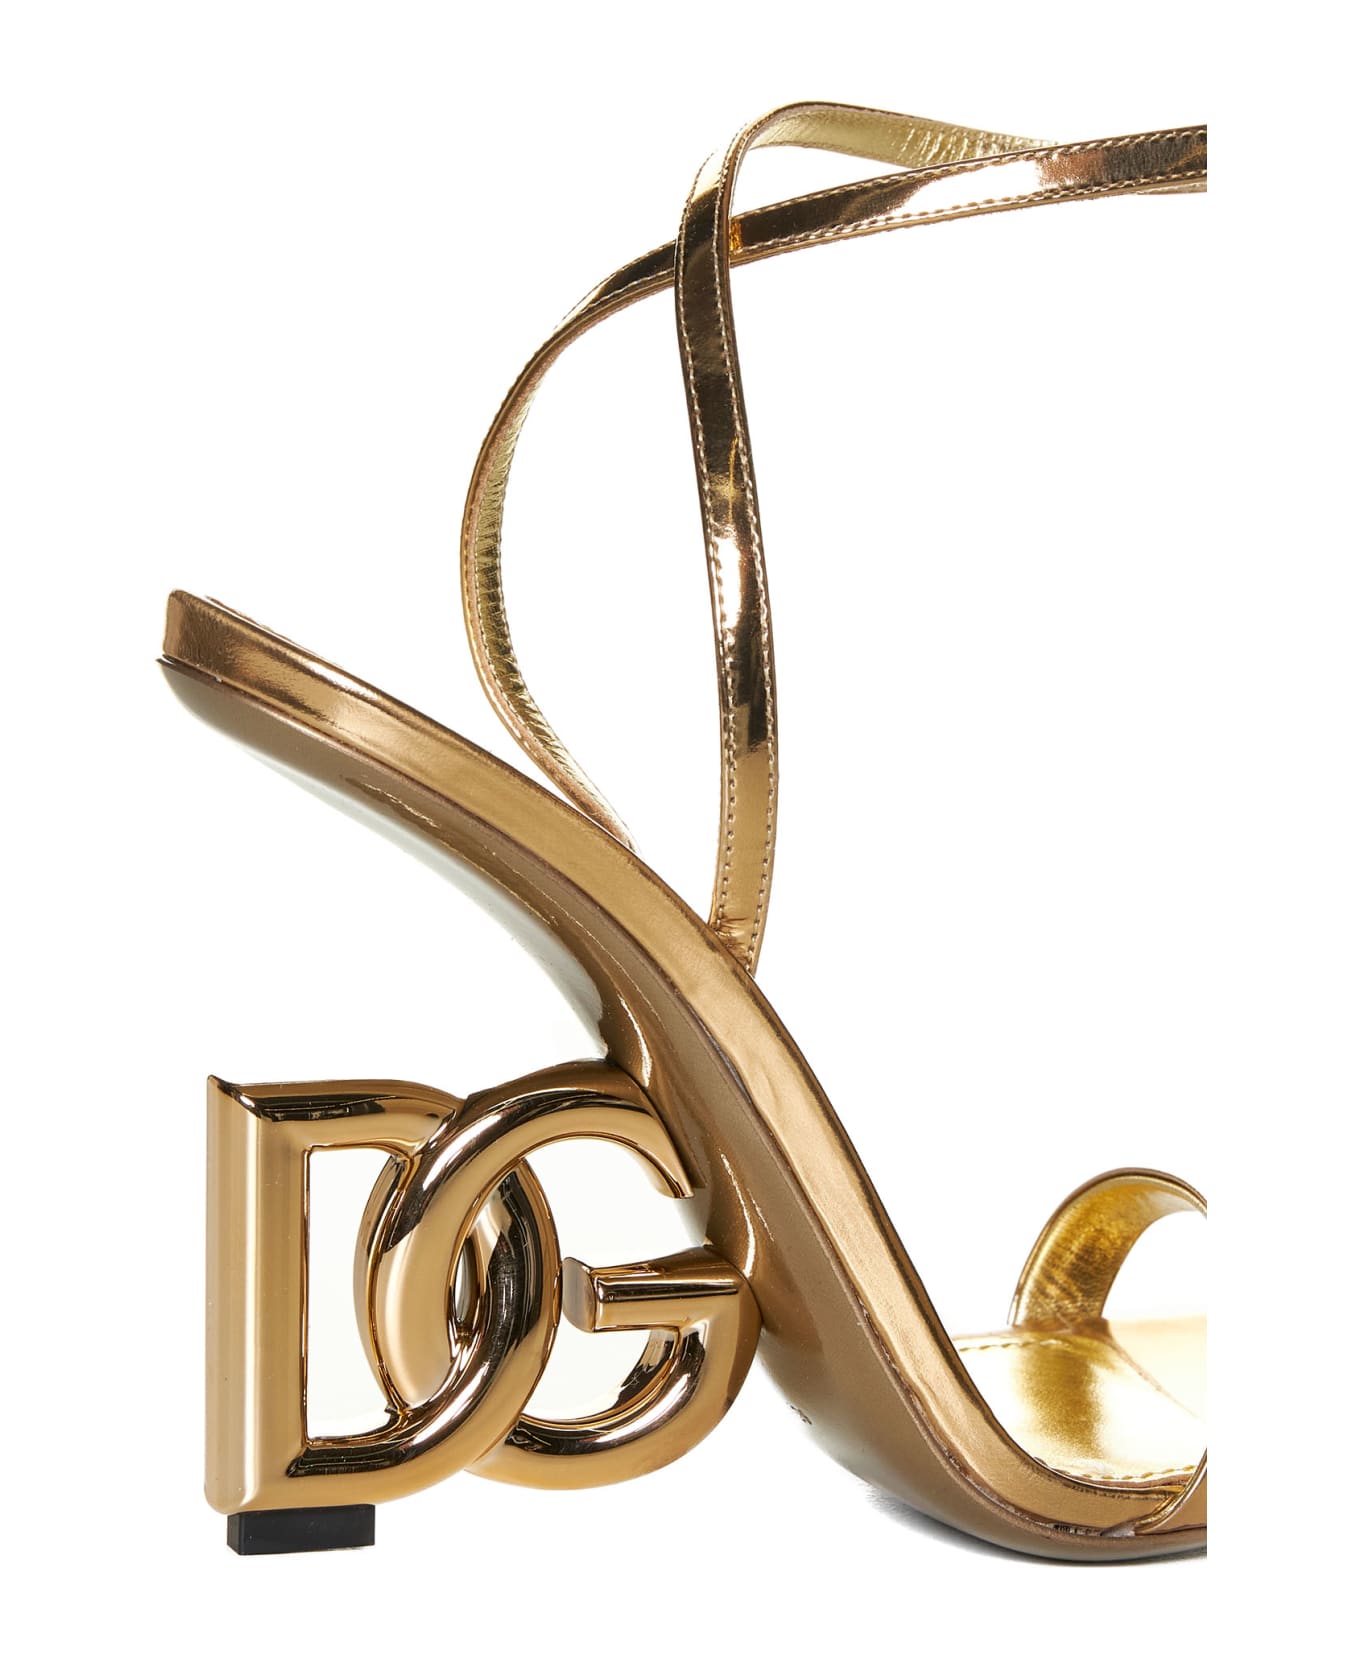 Dolce & Gabbana Dg Logo Pump Sandals - Gold